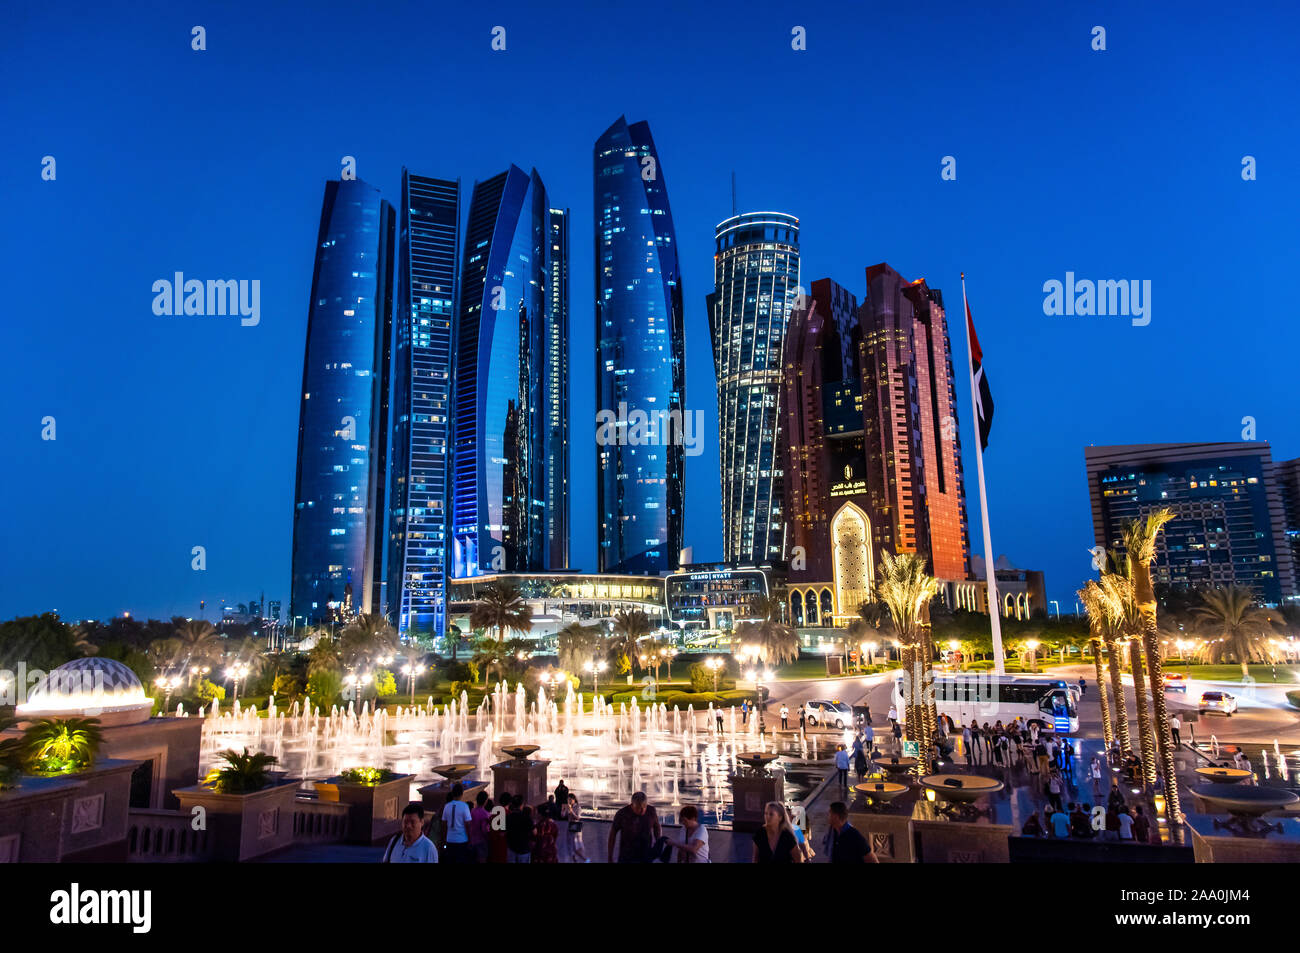 Abu Dhabi, United Arab Emirates - November 1, 2019: Etihad towers skyscrapers at the downtown Abu Dhabi in the UAE Stock Photo